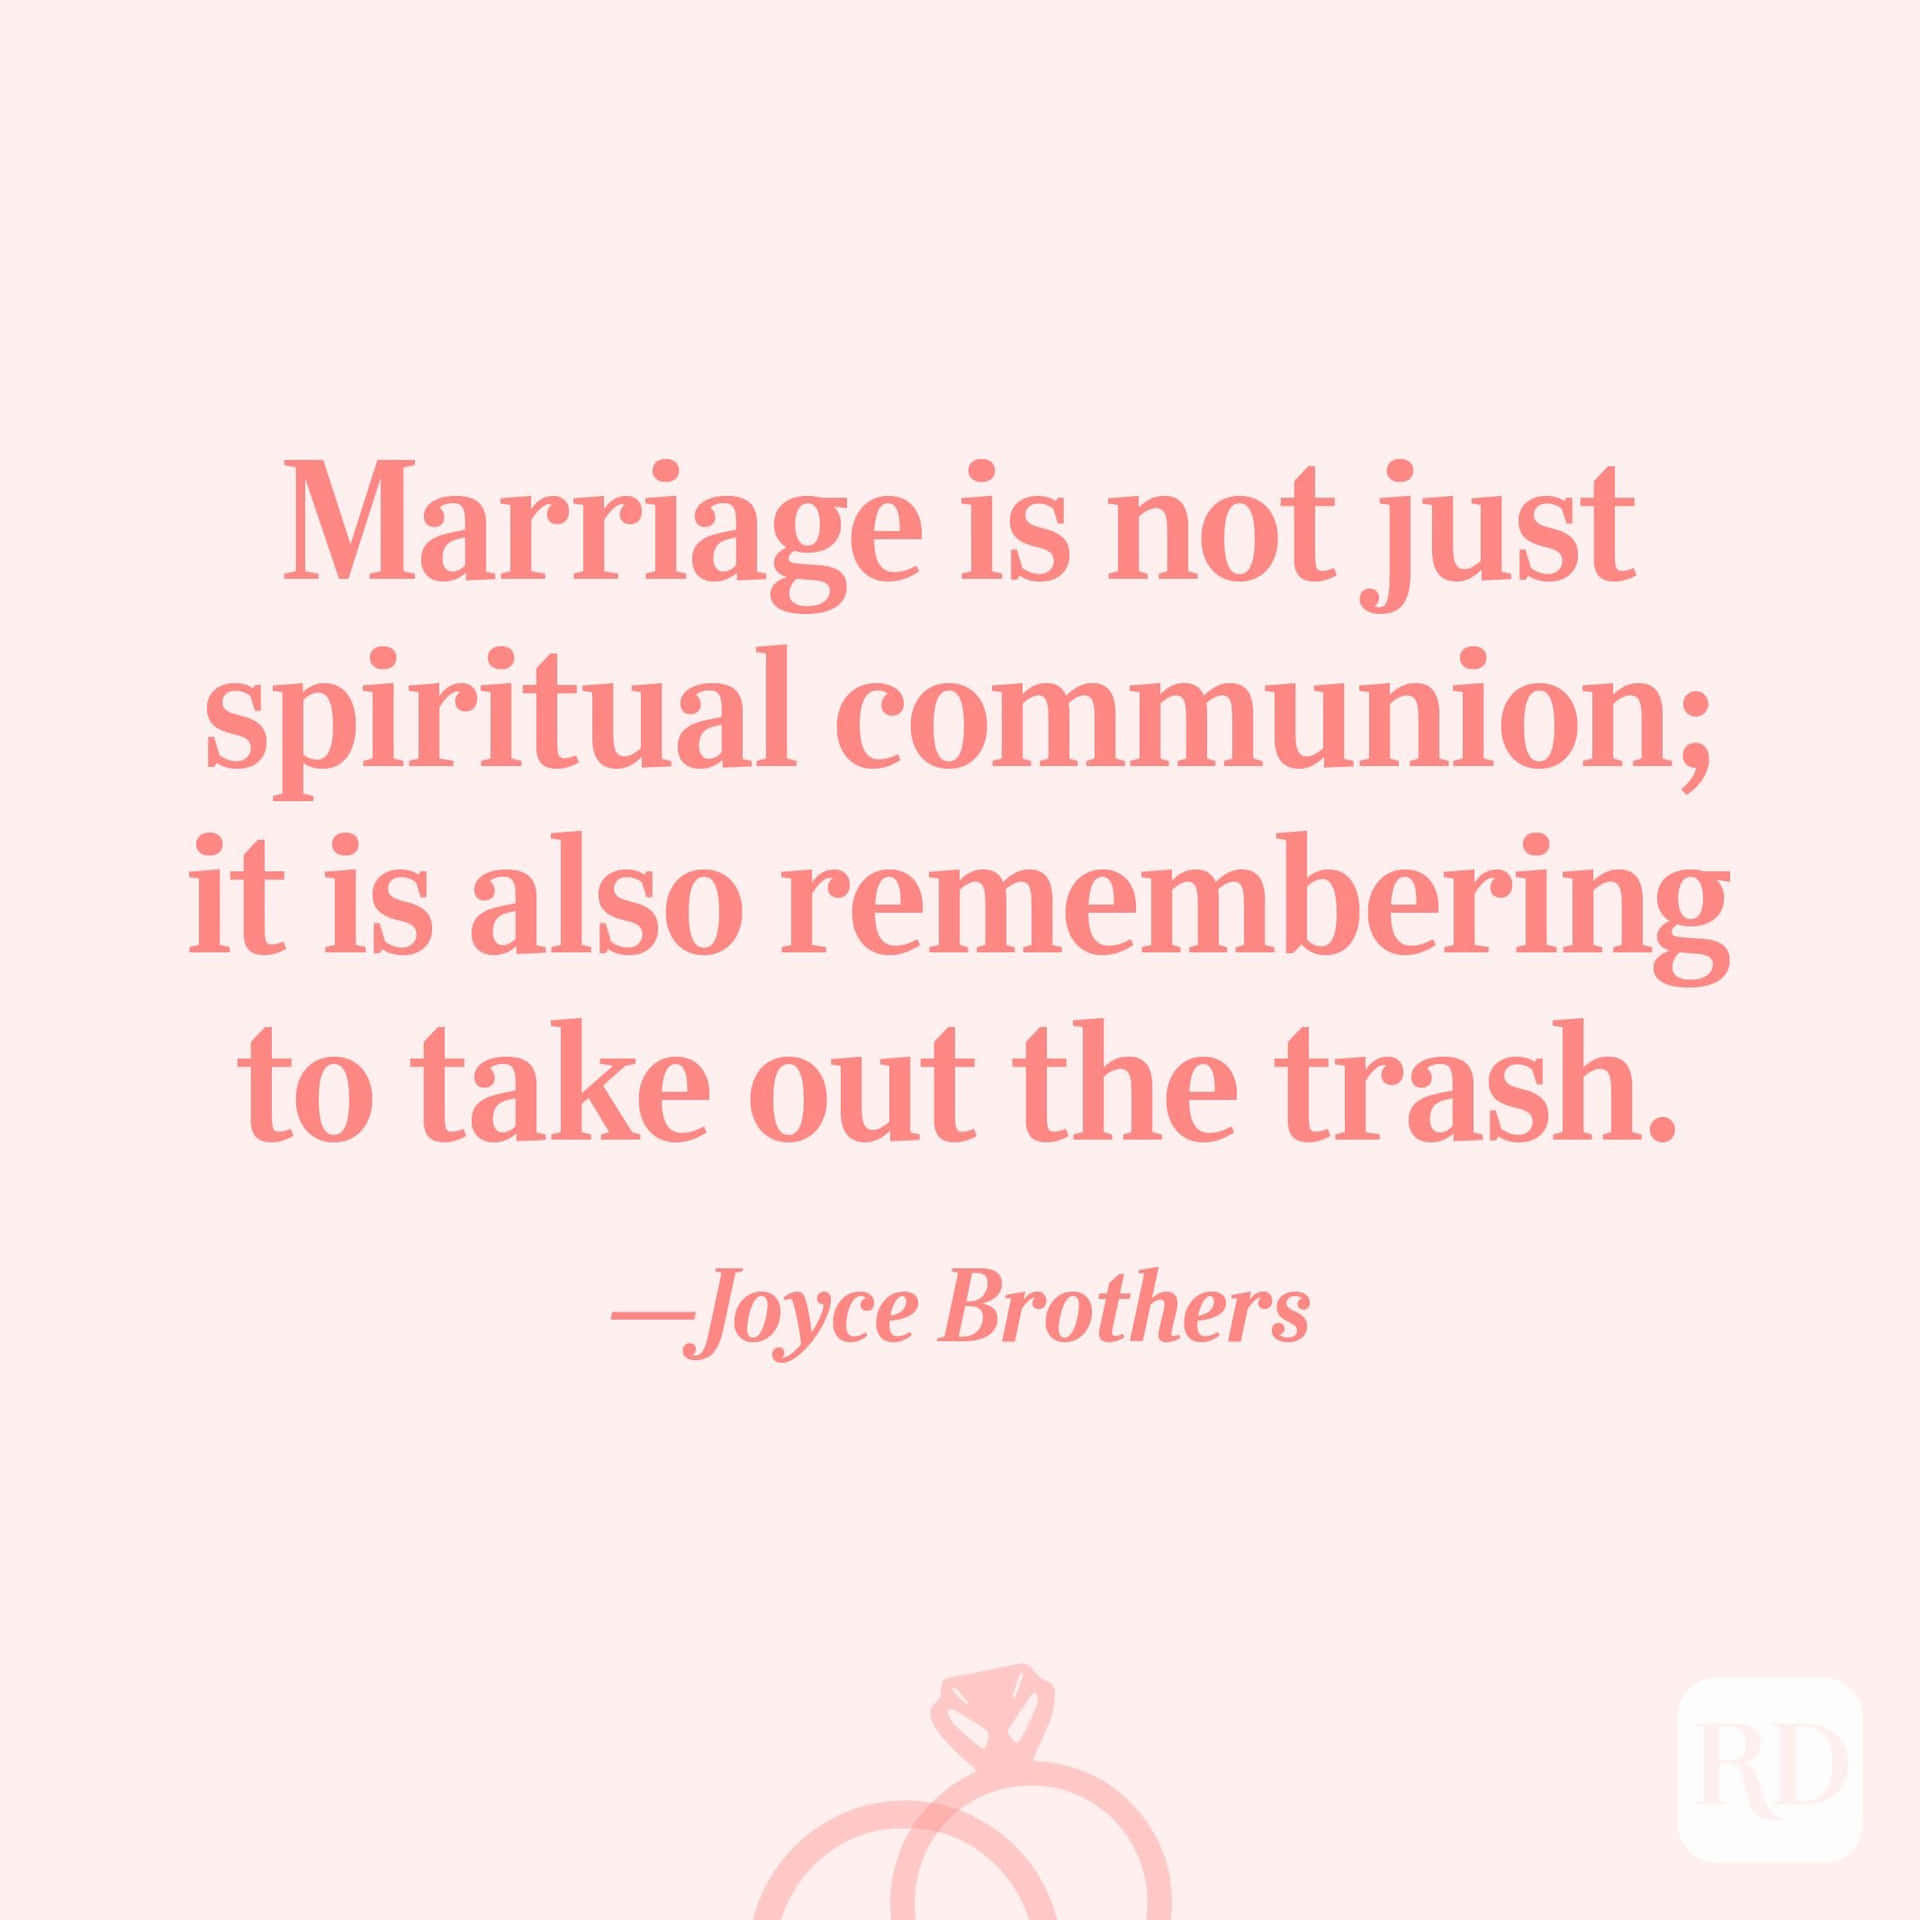 Marriage Communionand Trash Quote Wallpaper